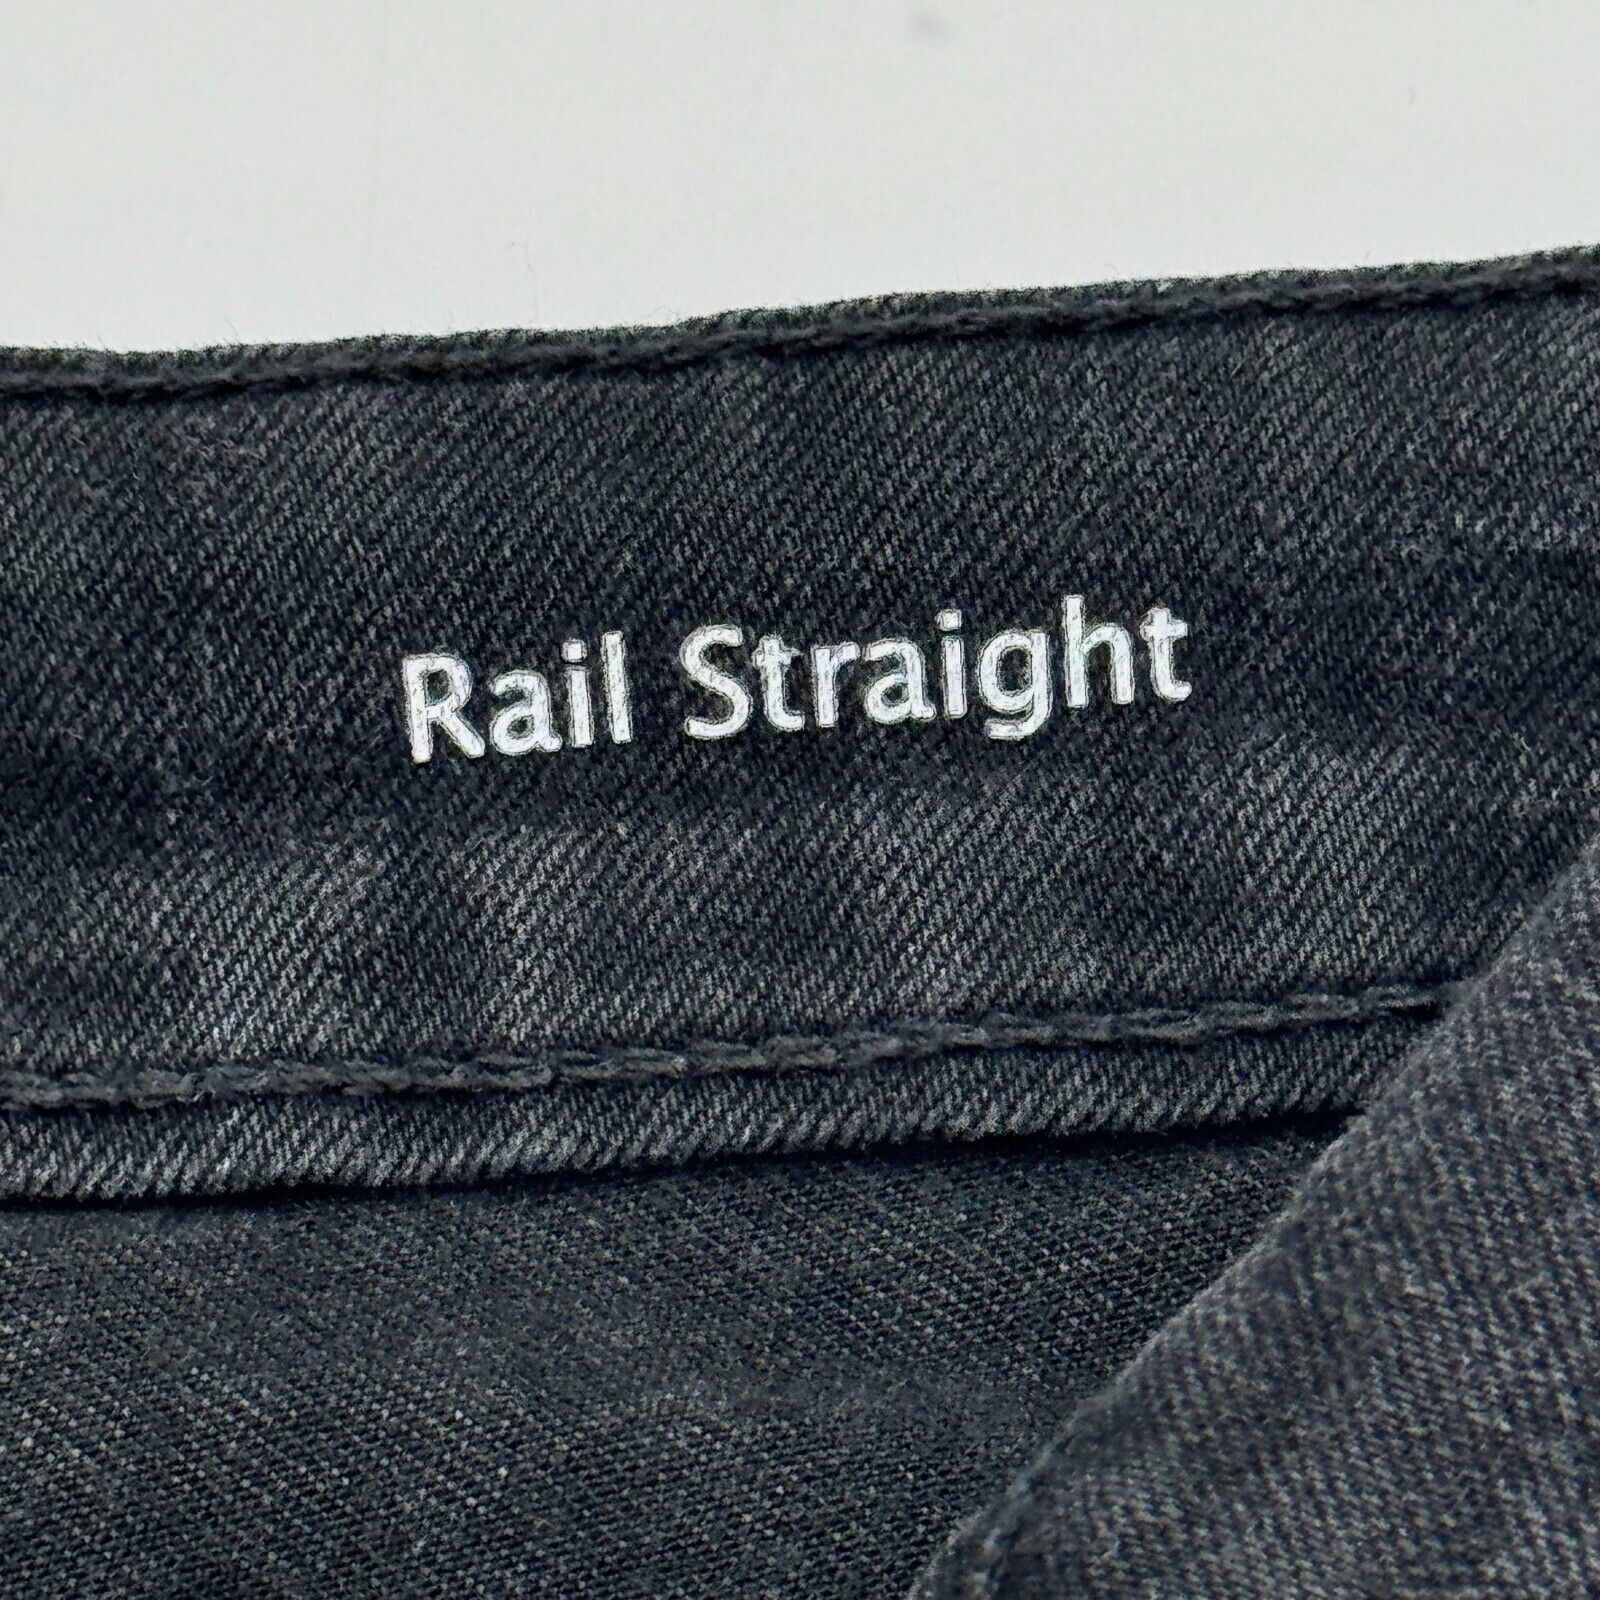 Gloria Vanderbilt Rail Straight Black Denim Jeans Womens Size 18